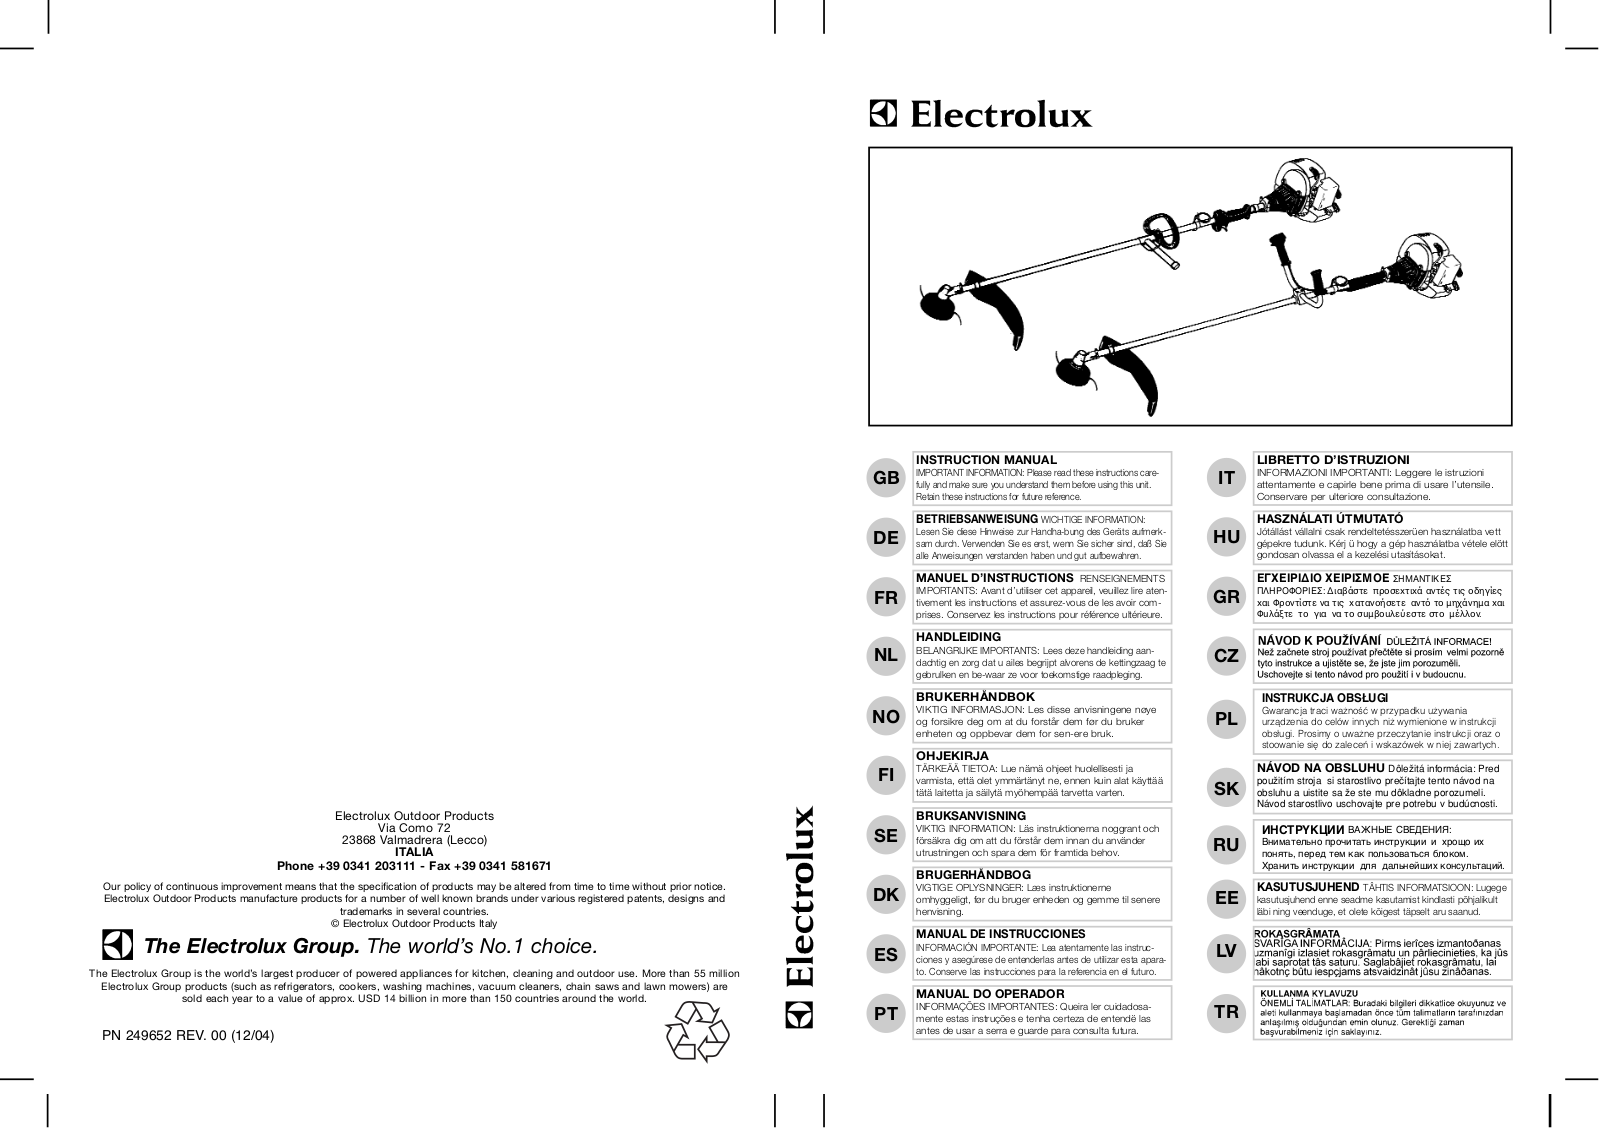 Electrolux B 380, B 341, B 340 + BORSA, B 340 + POLO, B 341 TNG Manual